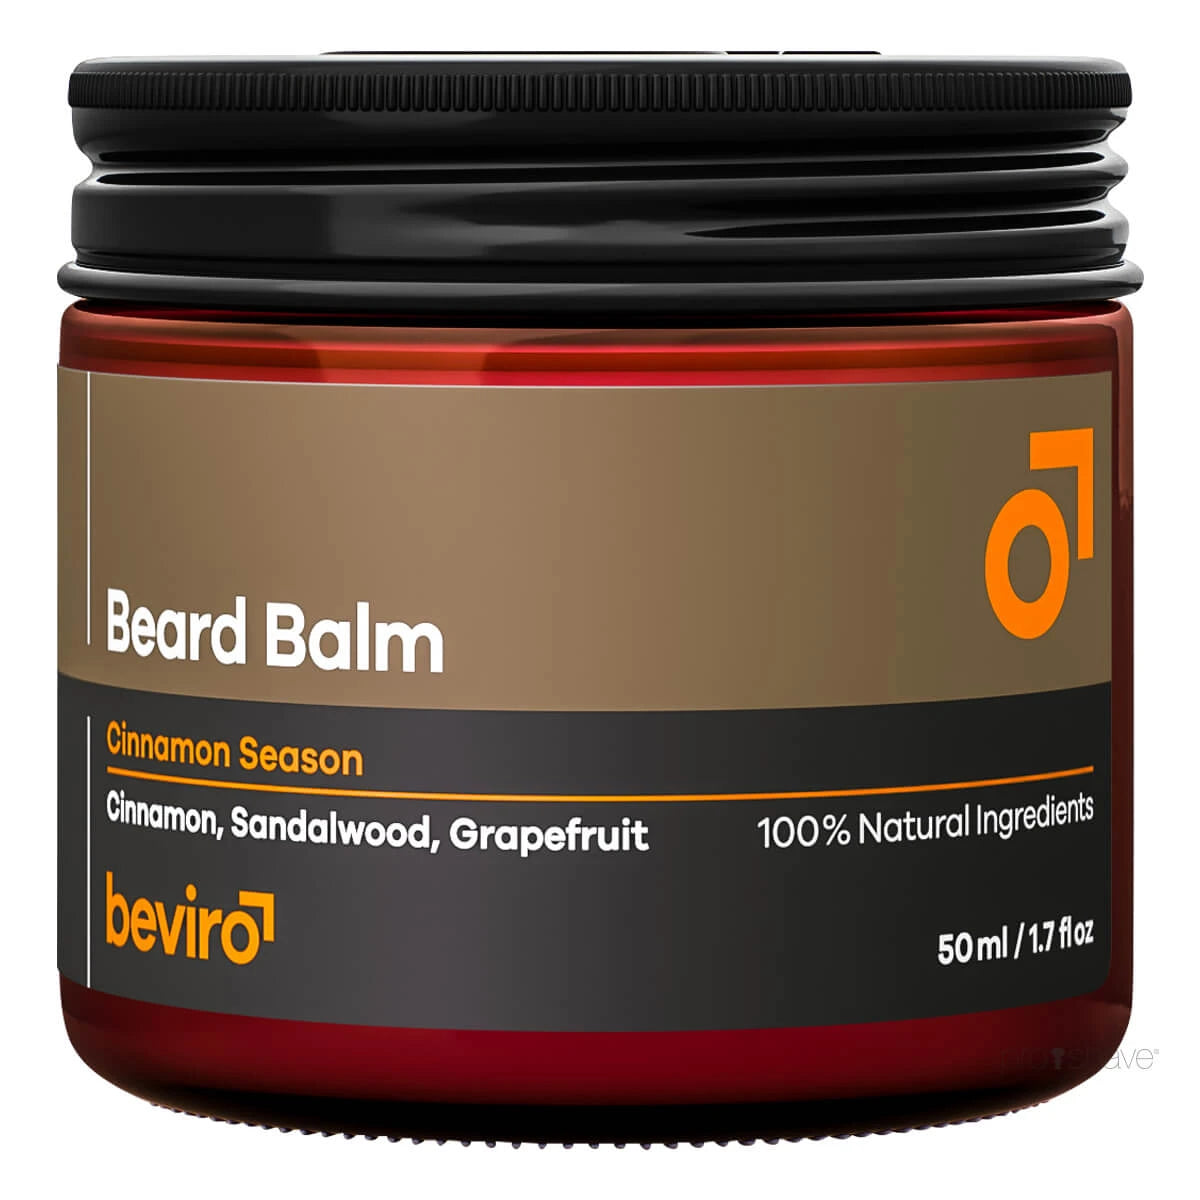 Beviro, Beard Balm- Cinnamon Season